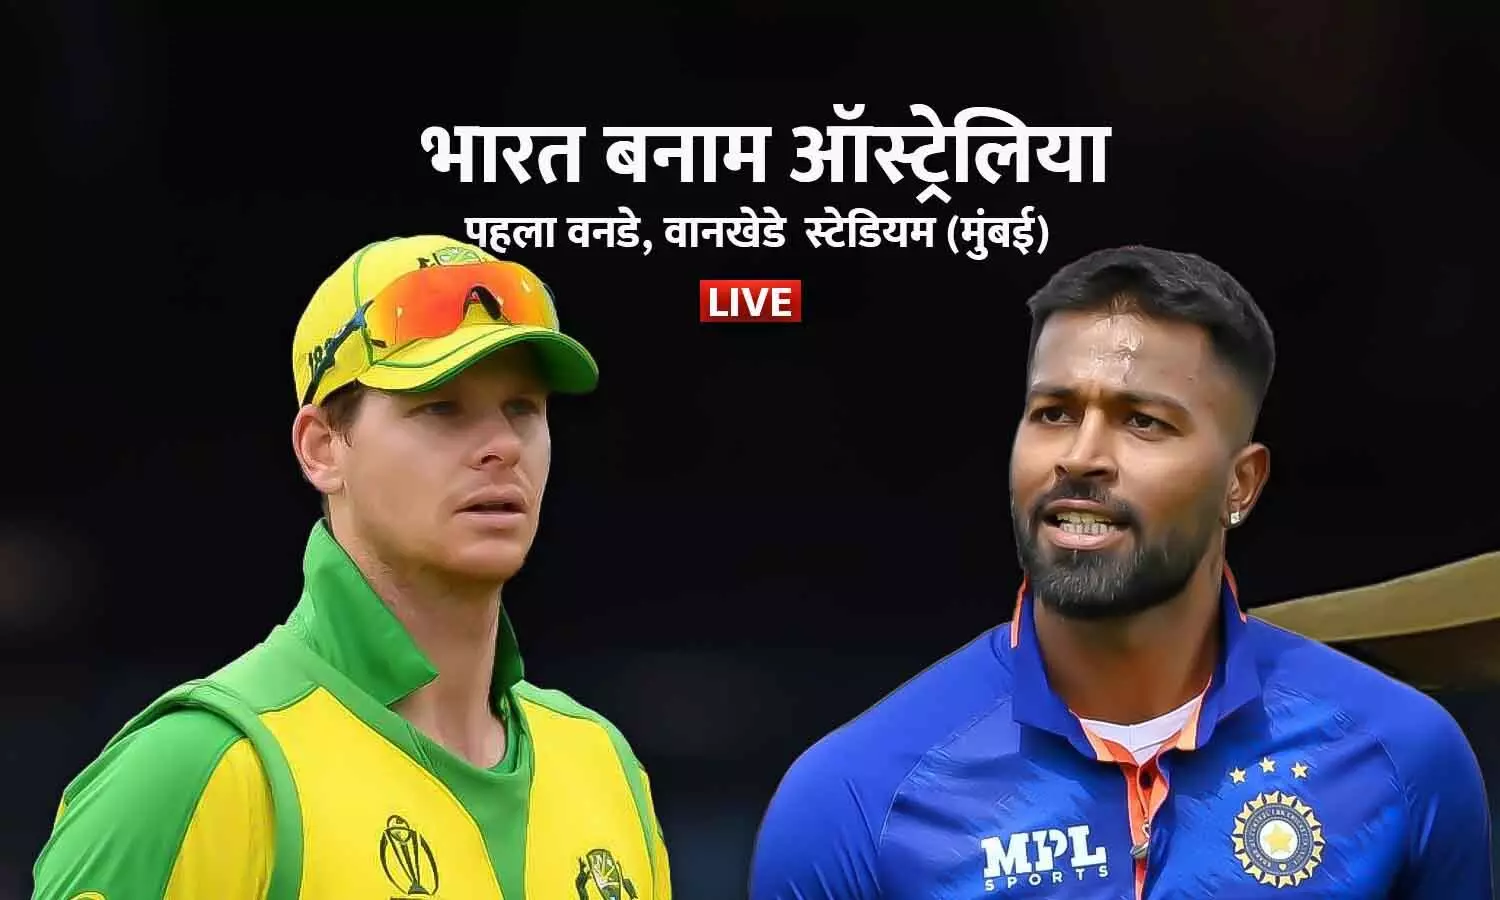 India vs Australia 1st ODI LIVE Score in Hindi